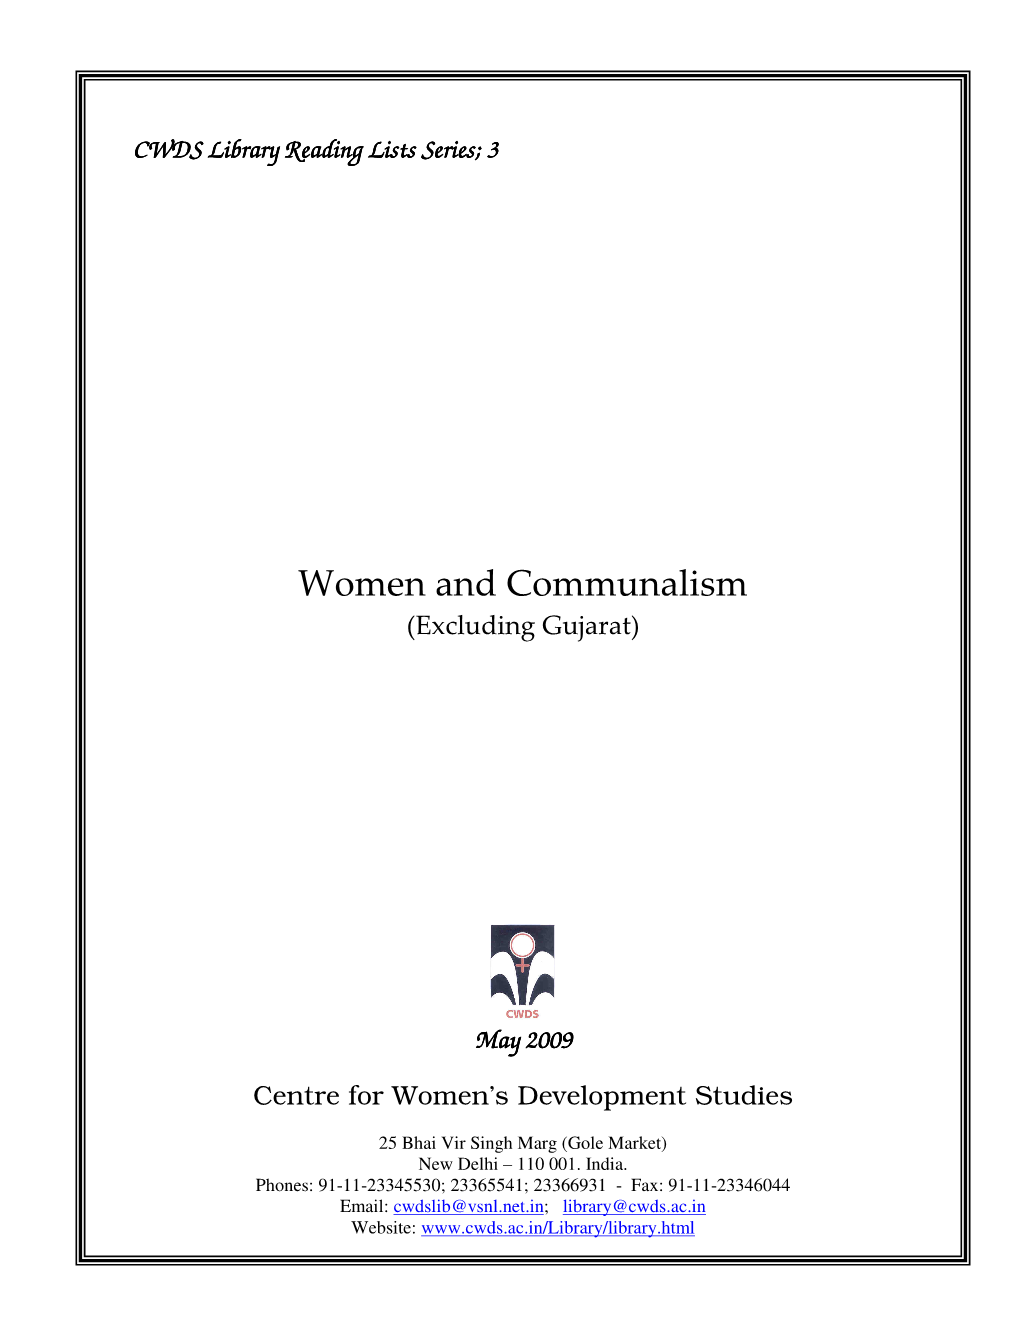 Women and Communalism (Excluding Gujarat)